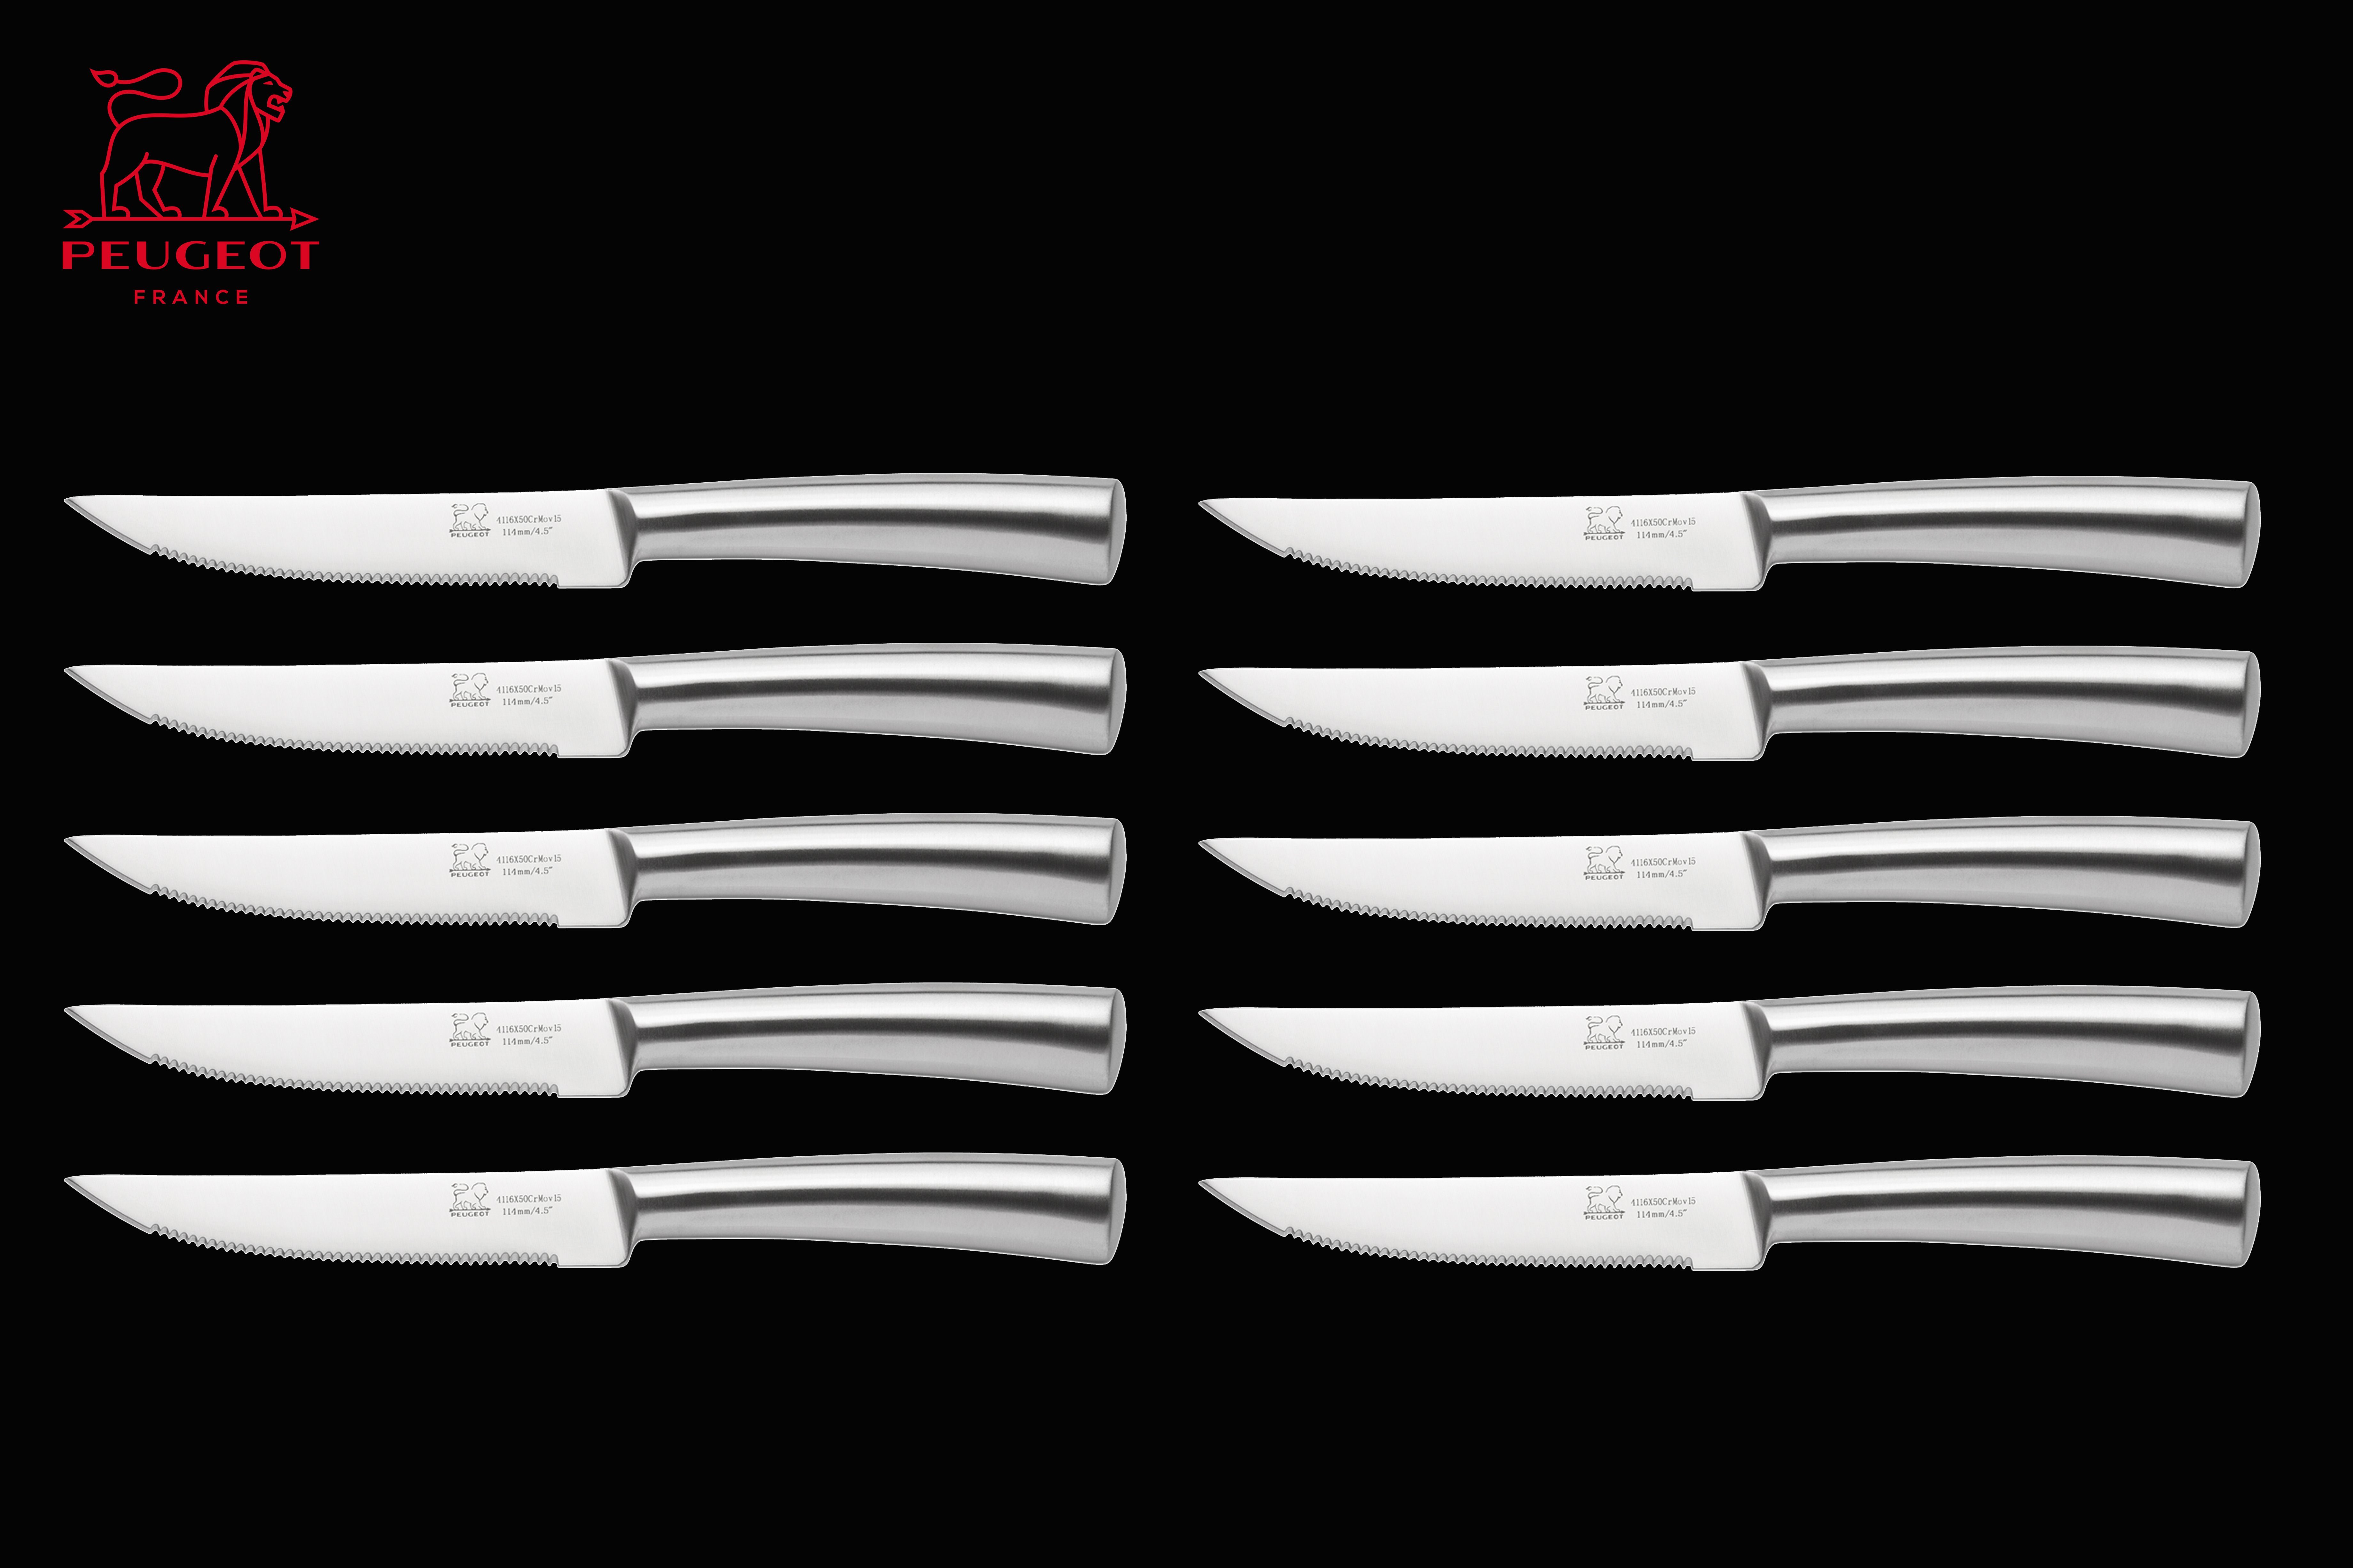 PEUGEOT Steakmesser Steakmesser (10 Stück), Klinge: Chrom-Molybdän-Vanadium-Stahl, Griff: Edelstahl